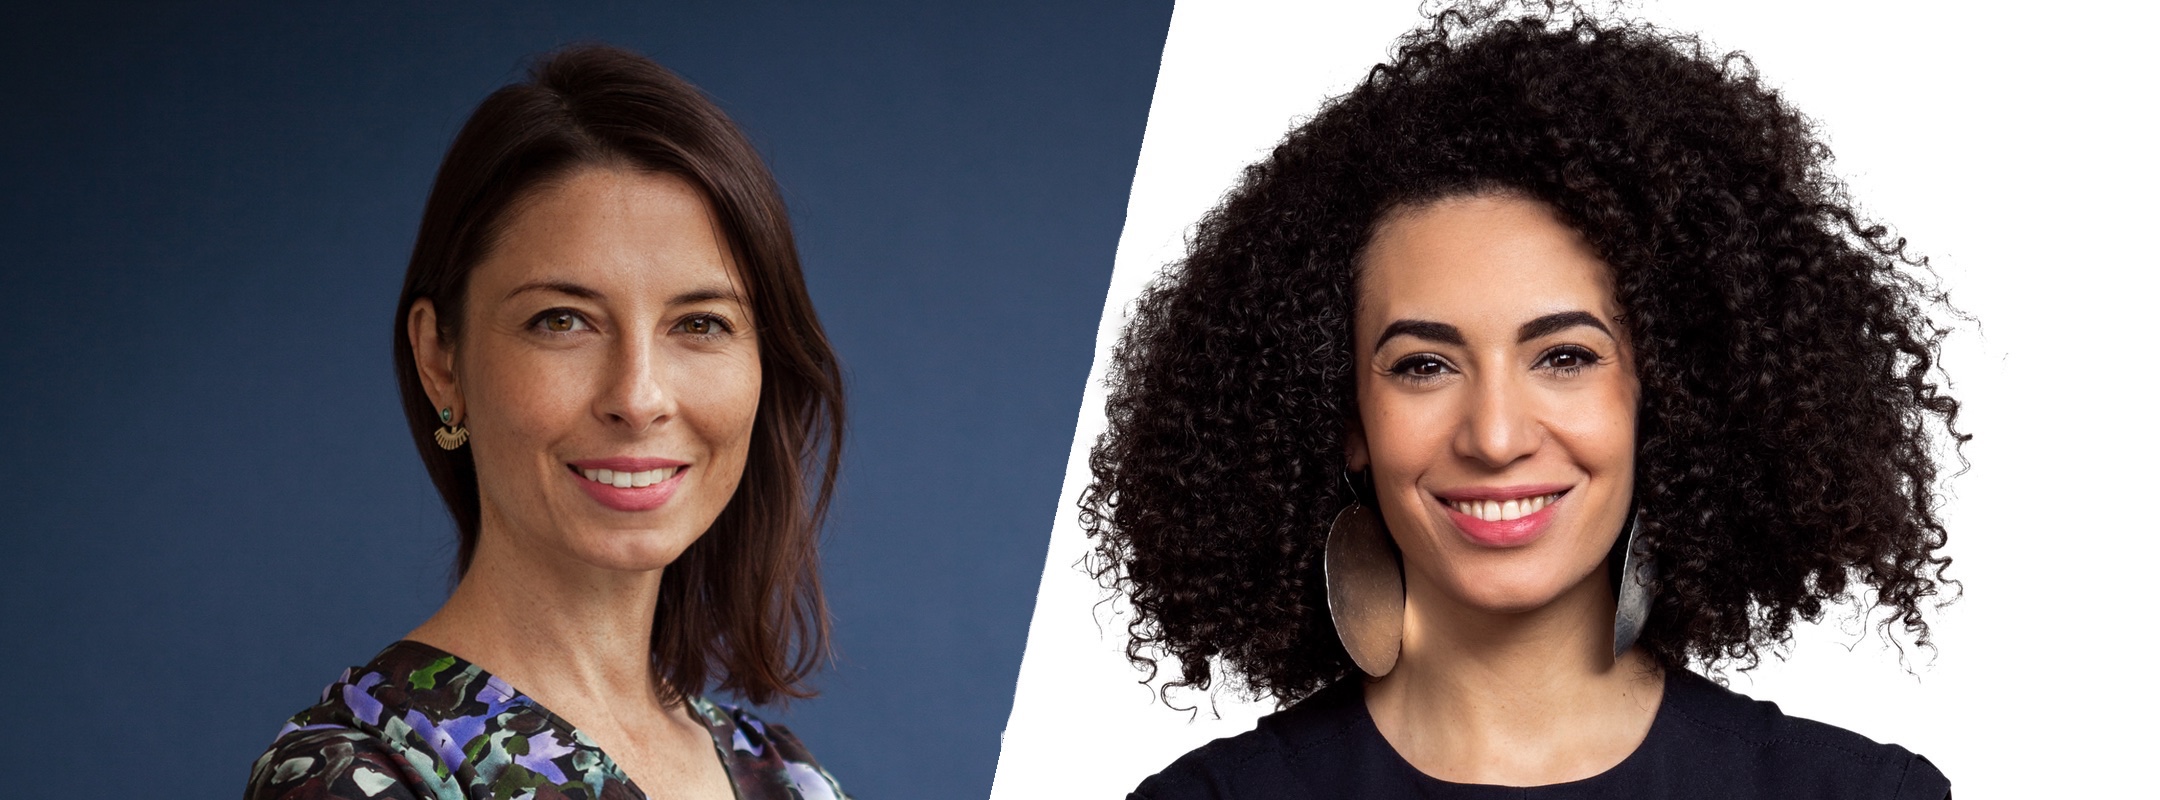 Sandra Runge und Alisha Andert | New Lawyers – der TalentRocket-Podcast